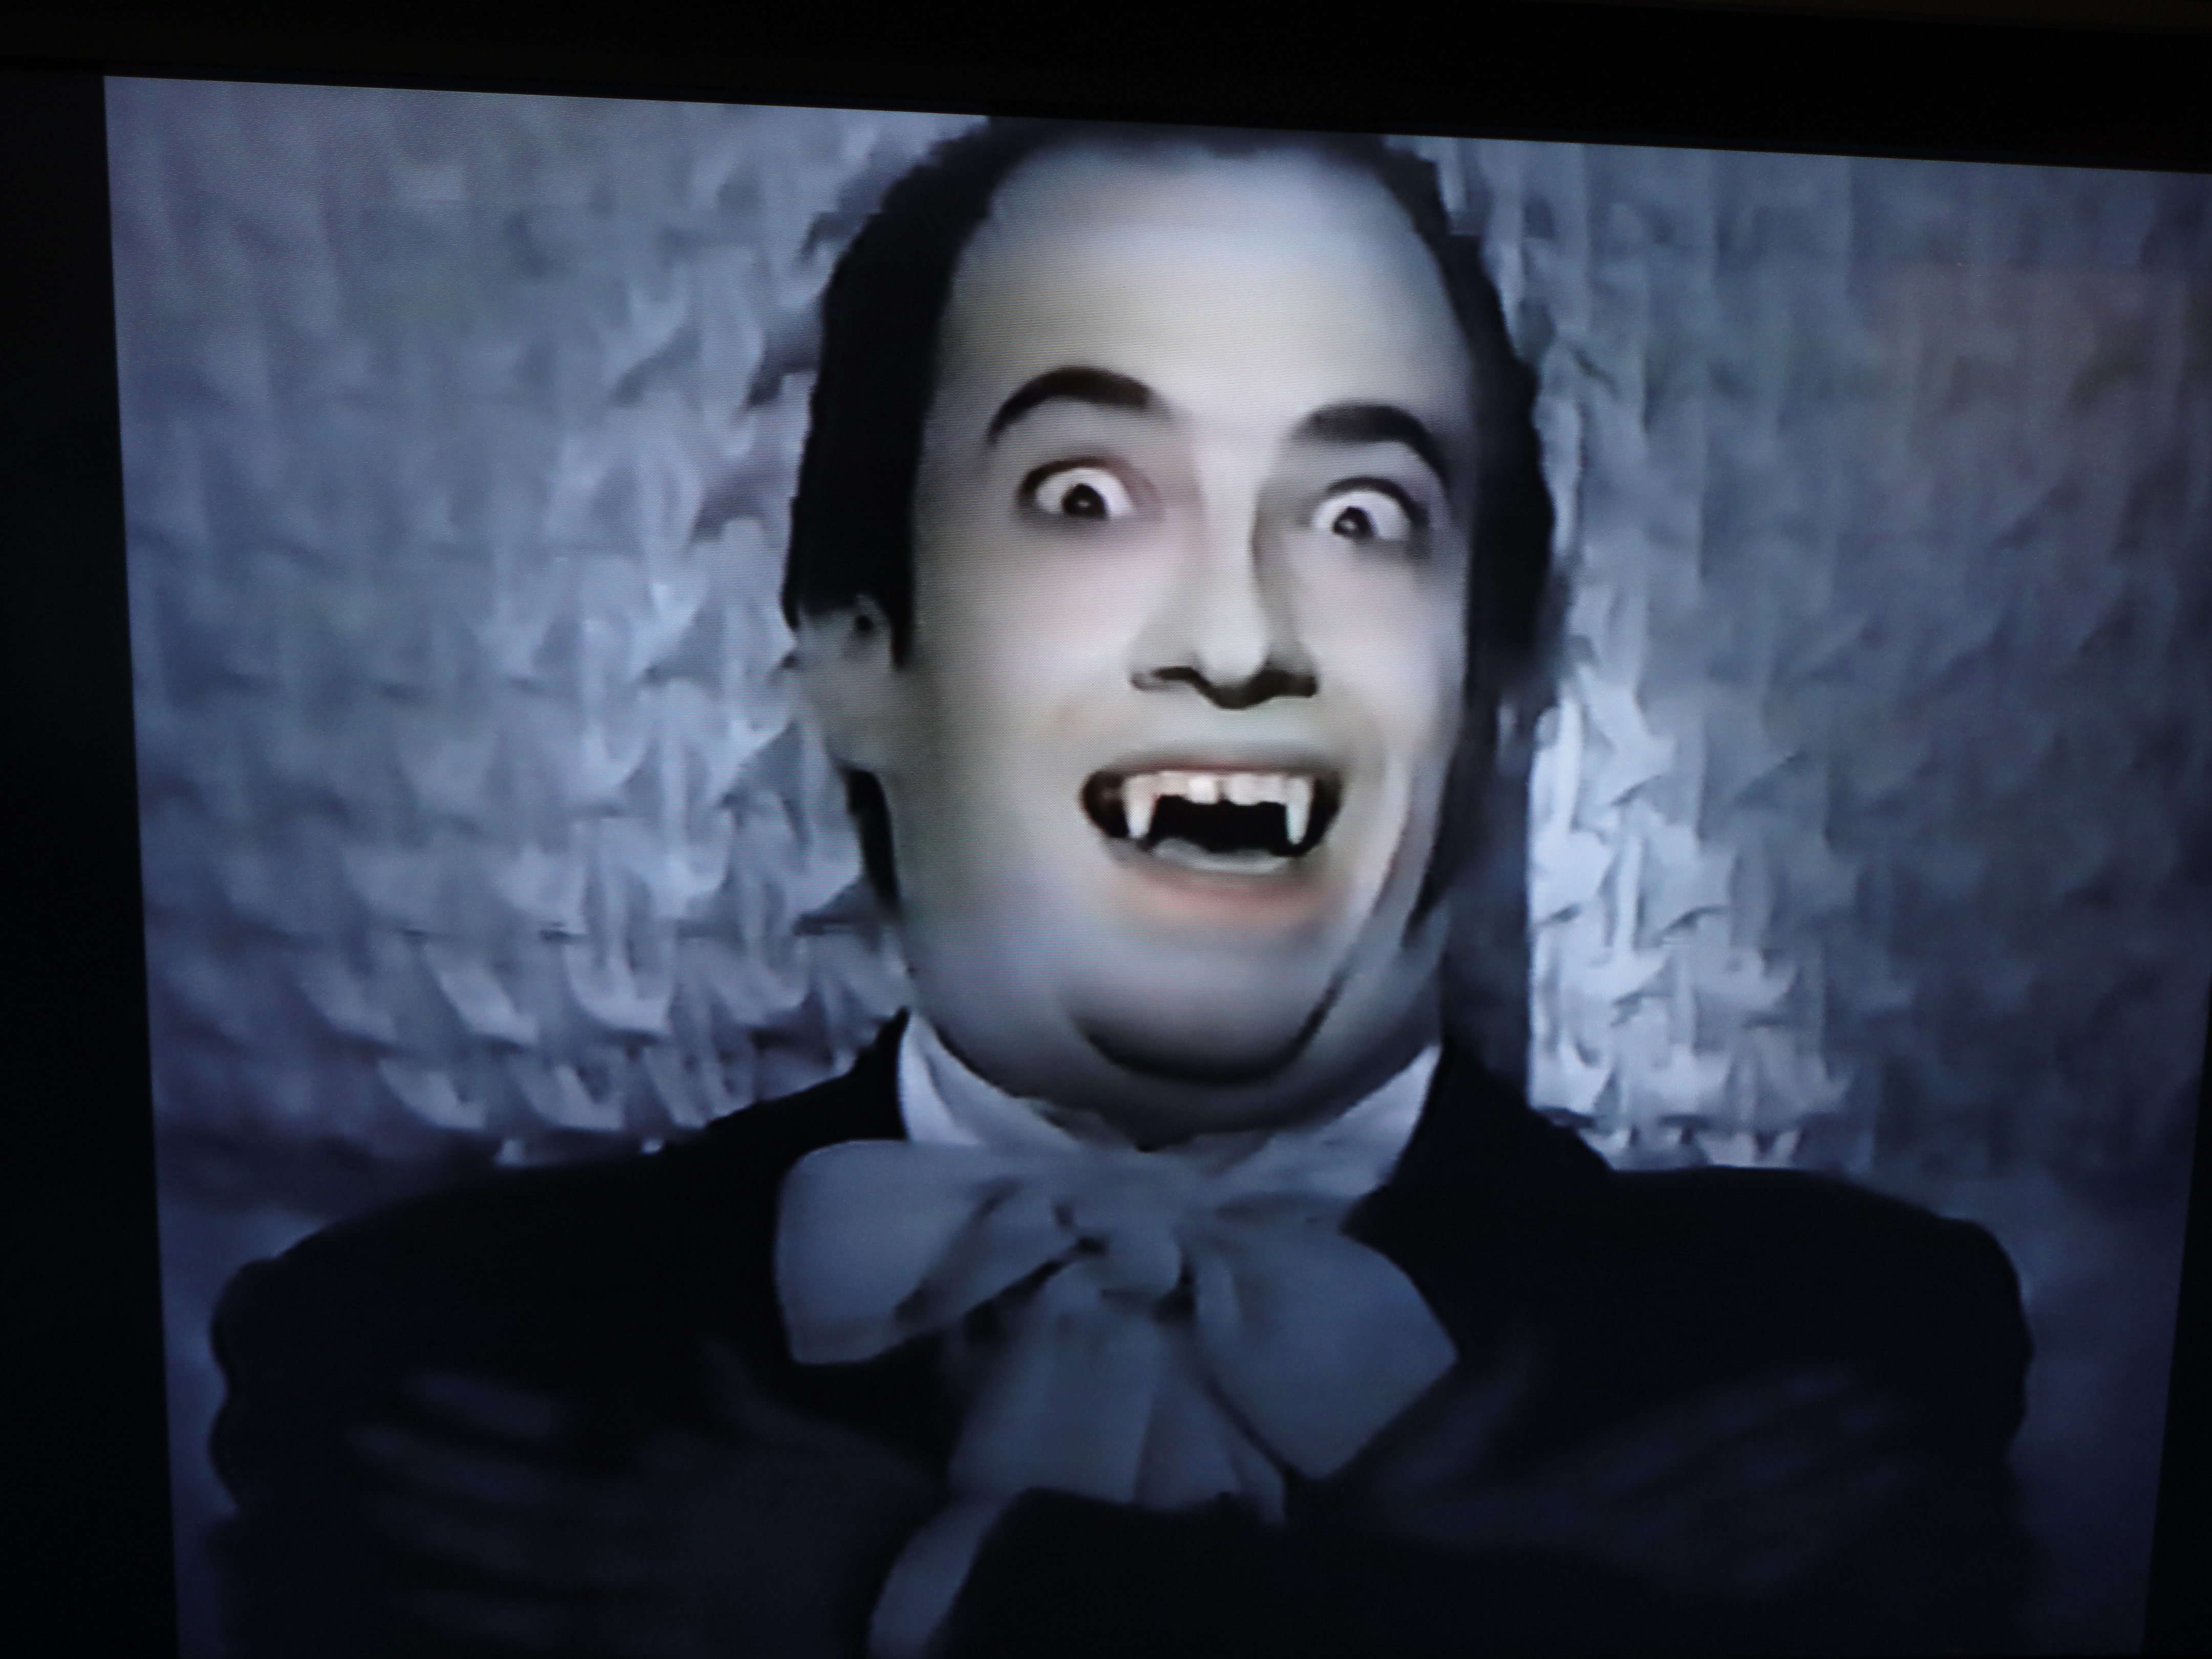 Jeff Eigen as a vampire for a Ricola cough drops commercial.